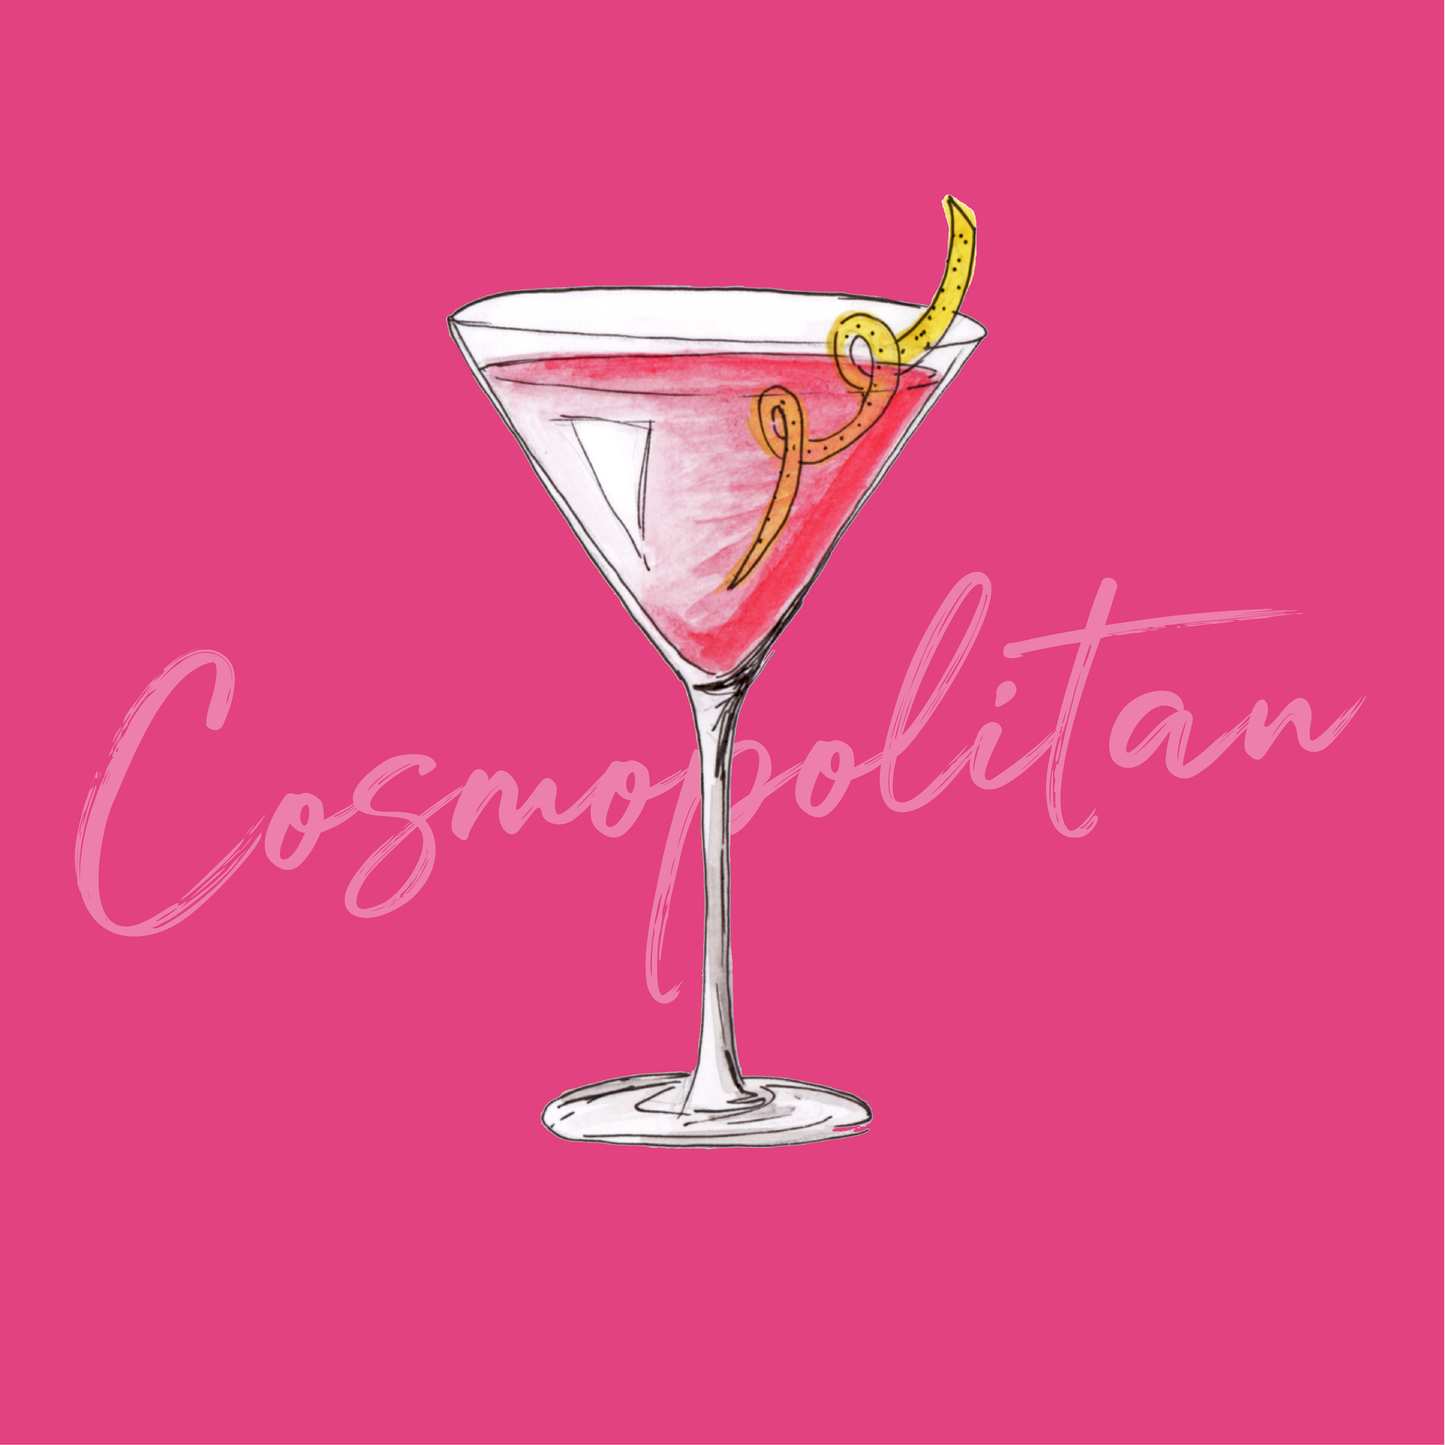 Cosmopolitan illustrated drinks coaster